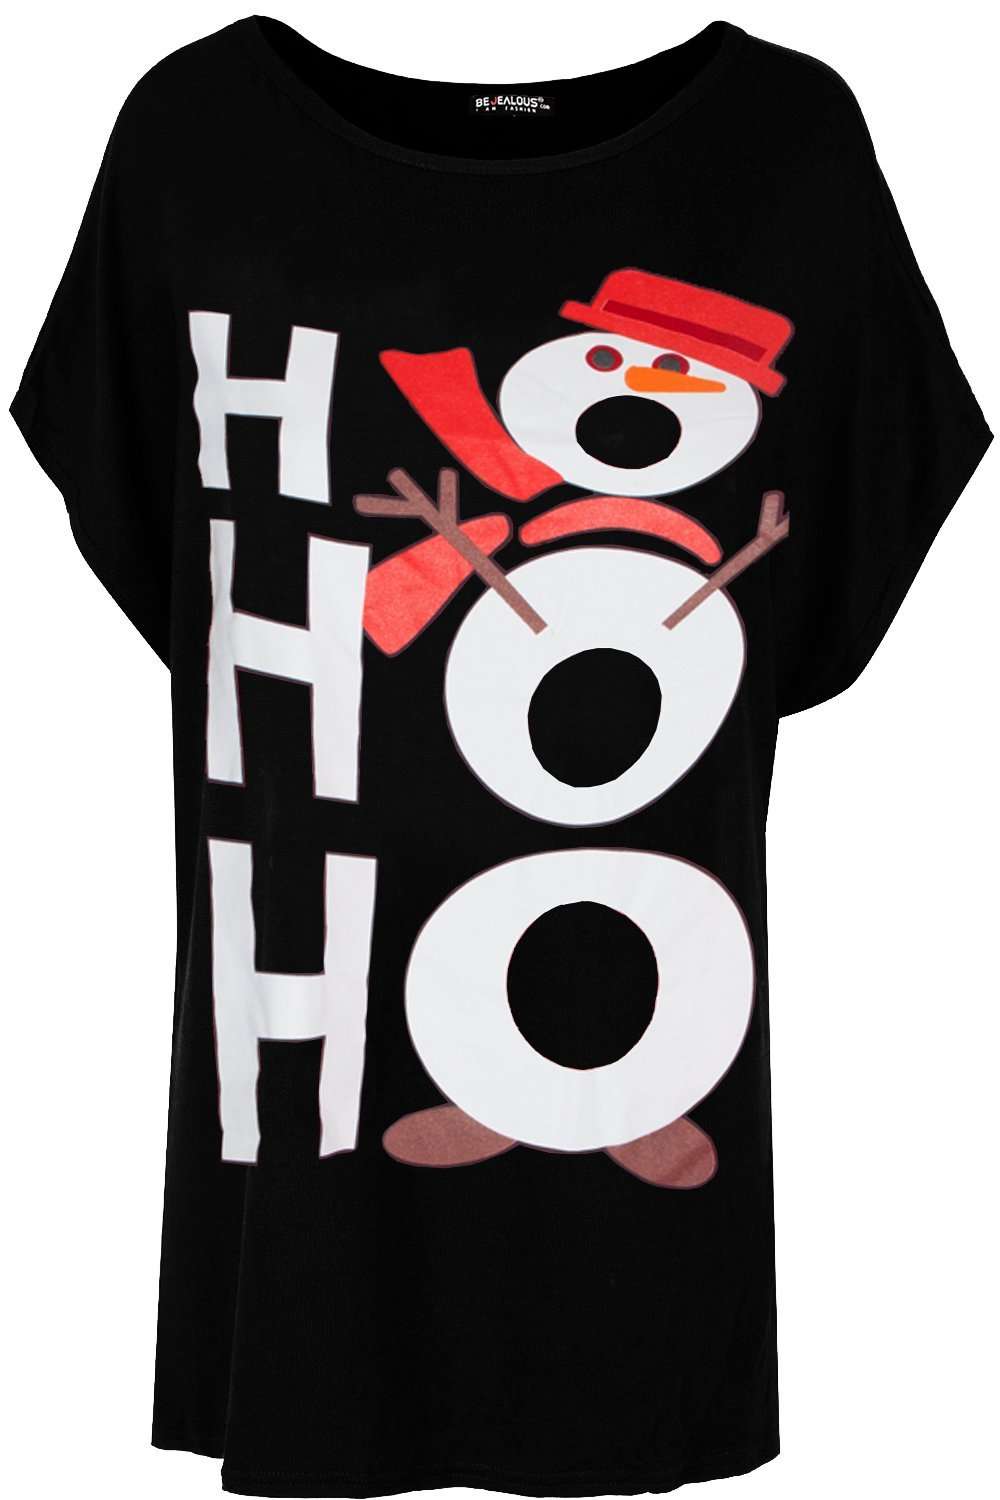 Hohoho Snowman Oversized Tshirt - bejealous-com